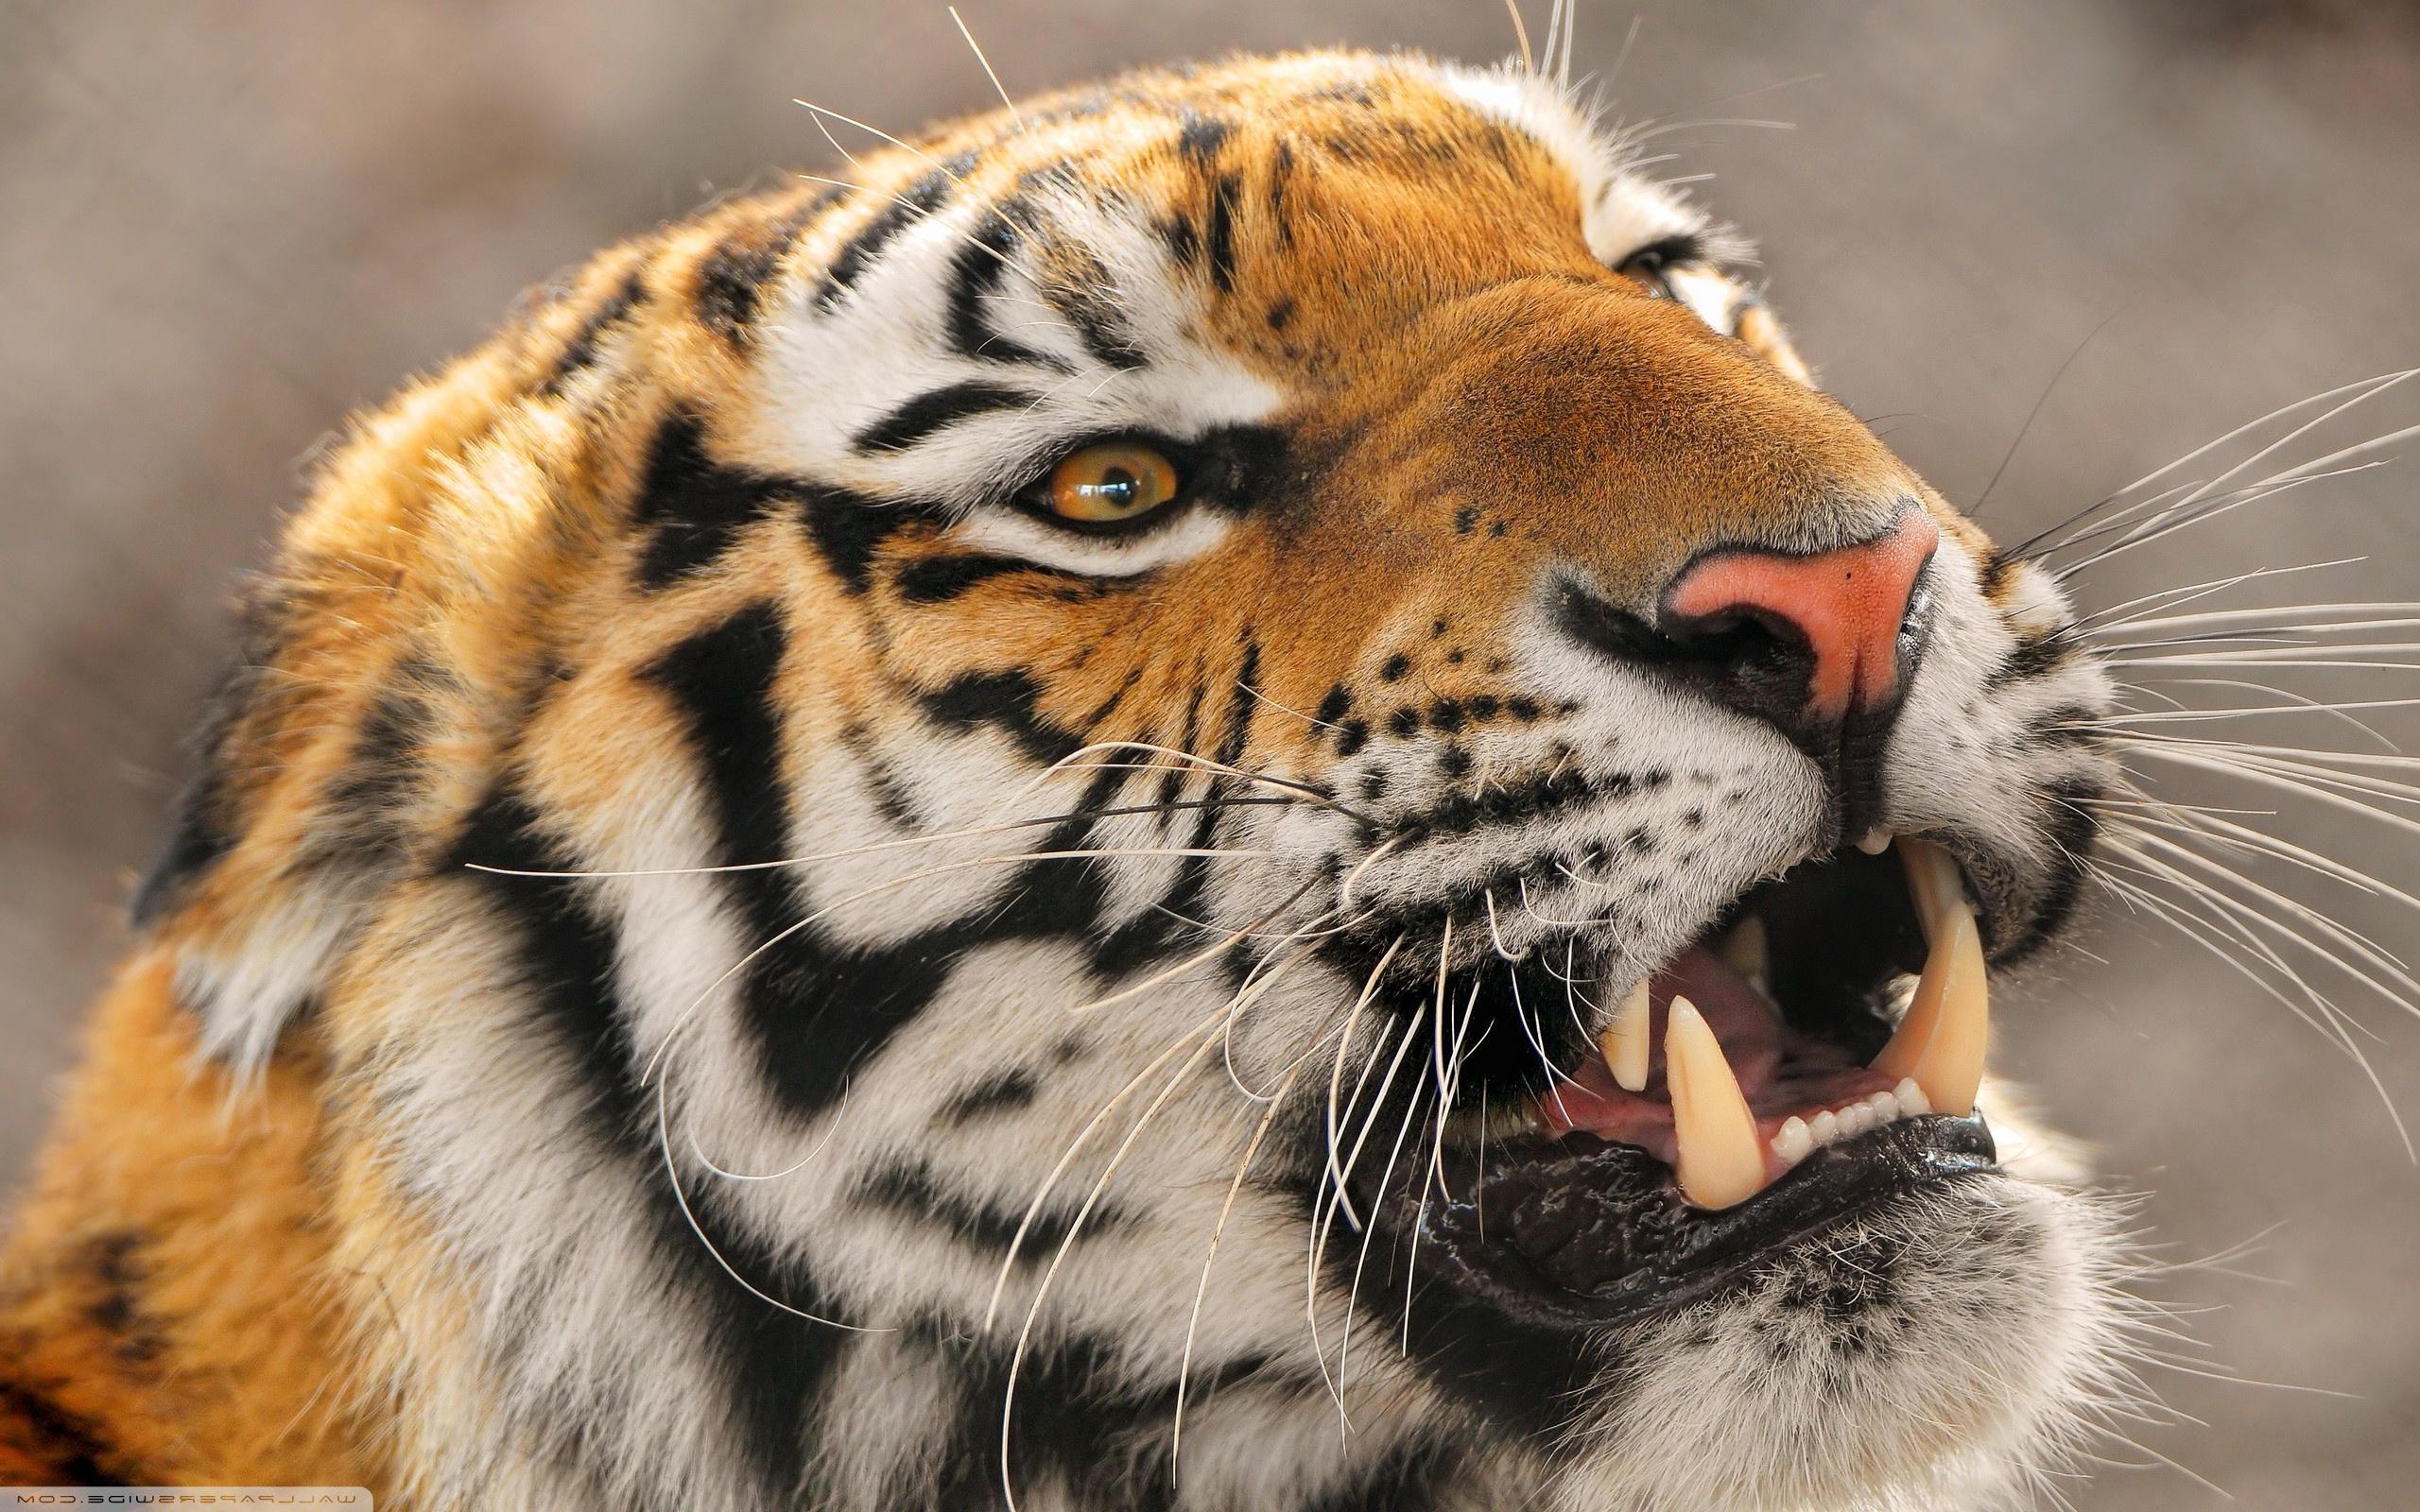 Tiger Roaring download high quality desktop wallpaper